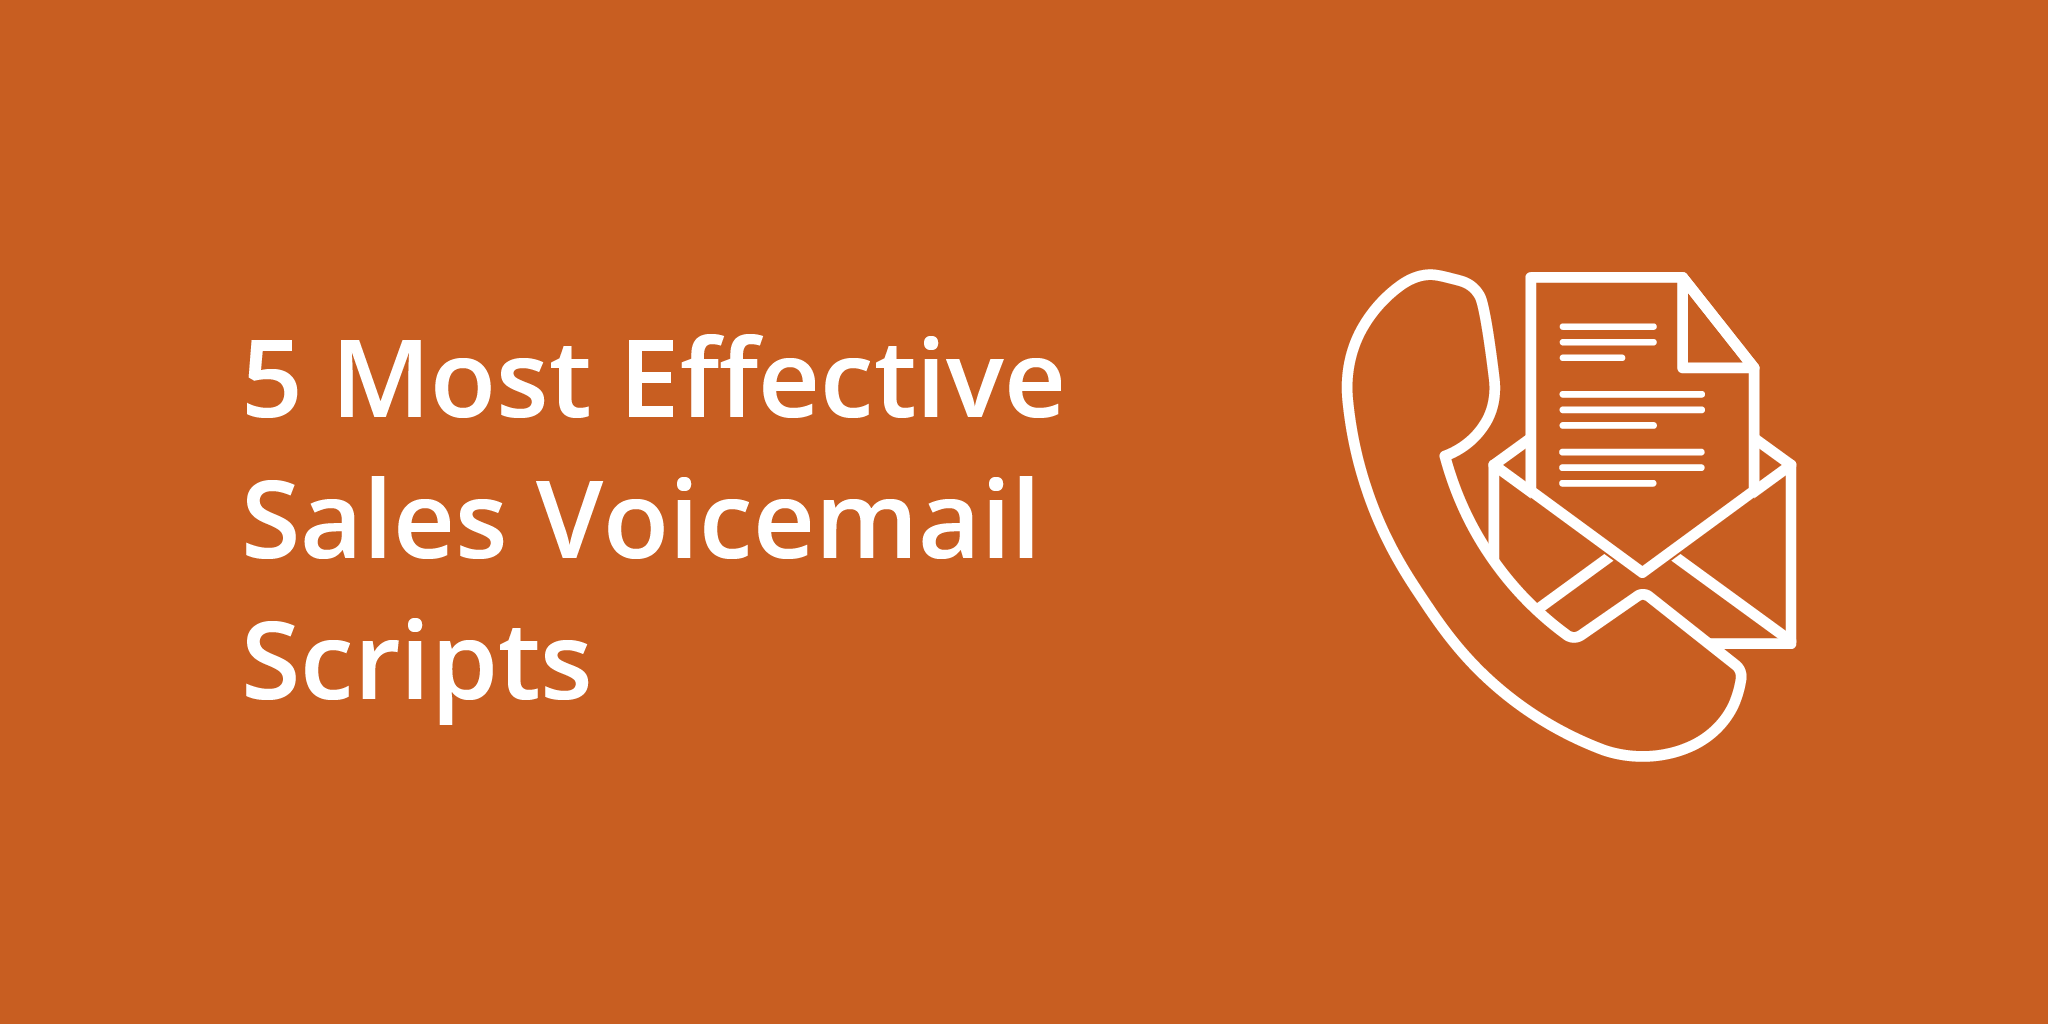 5 Most Effective Sales Voicemail Scripts